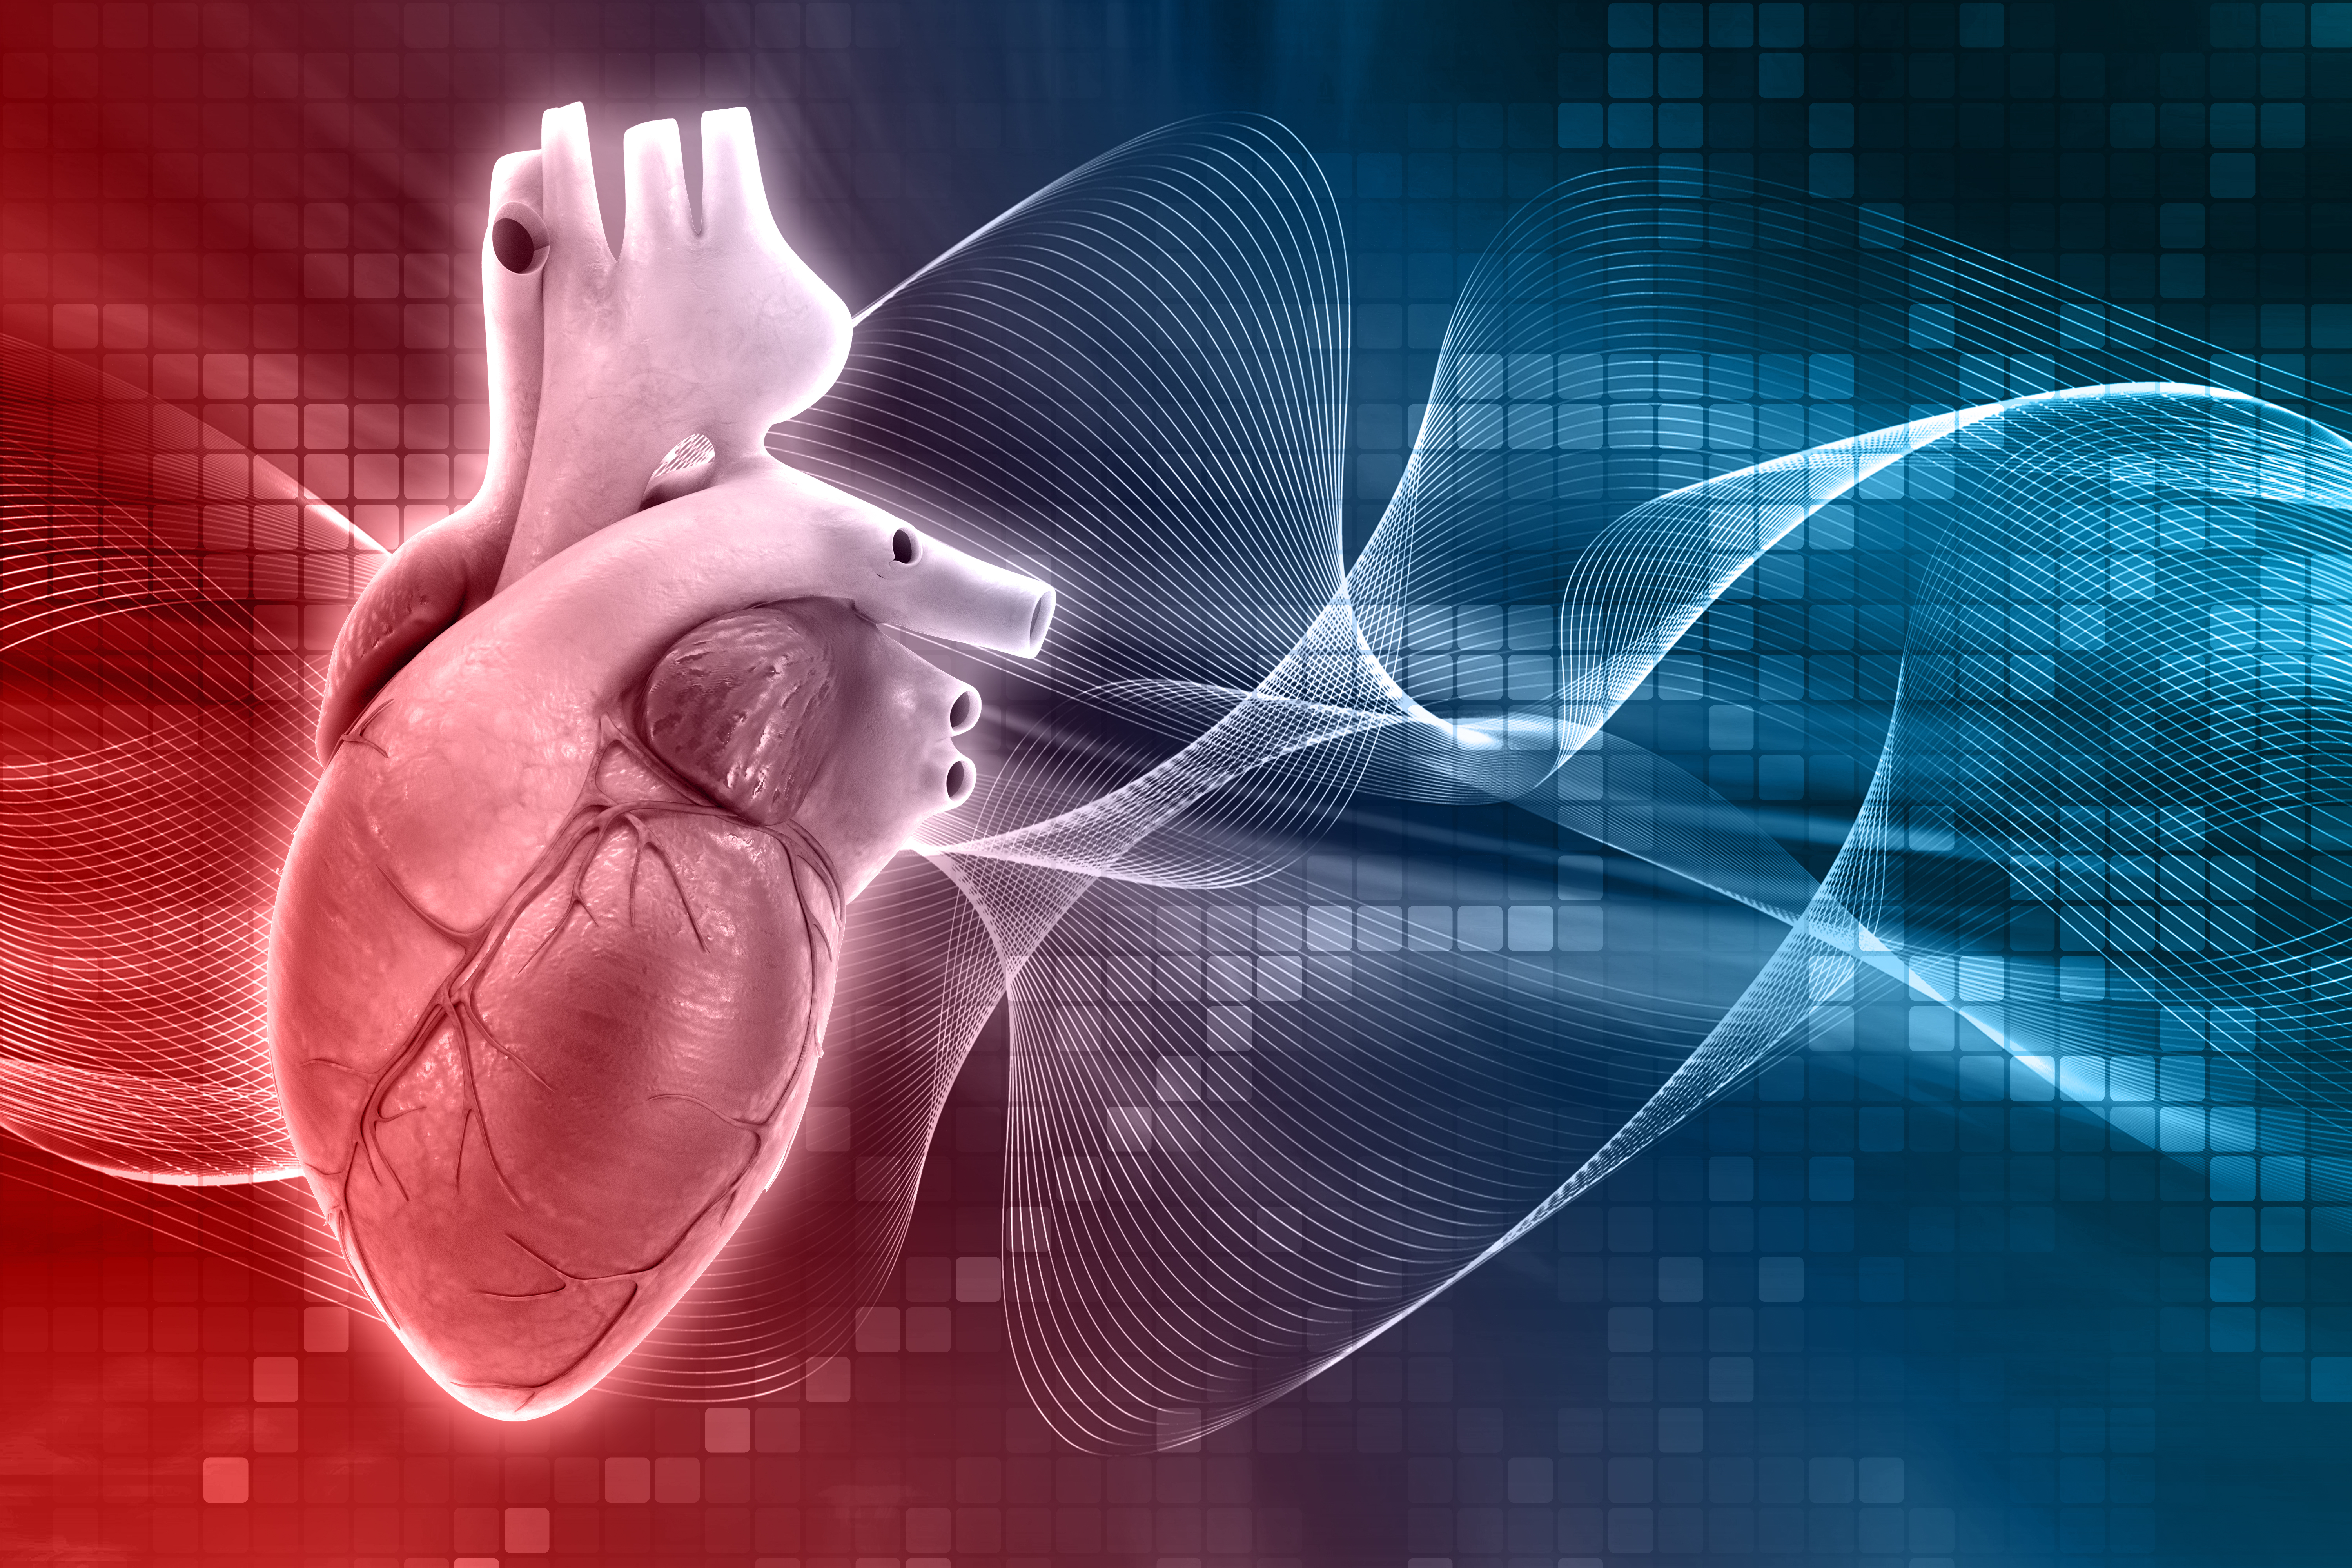 Heart mesh alleviates stubborn angina in 1st US procedure